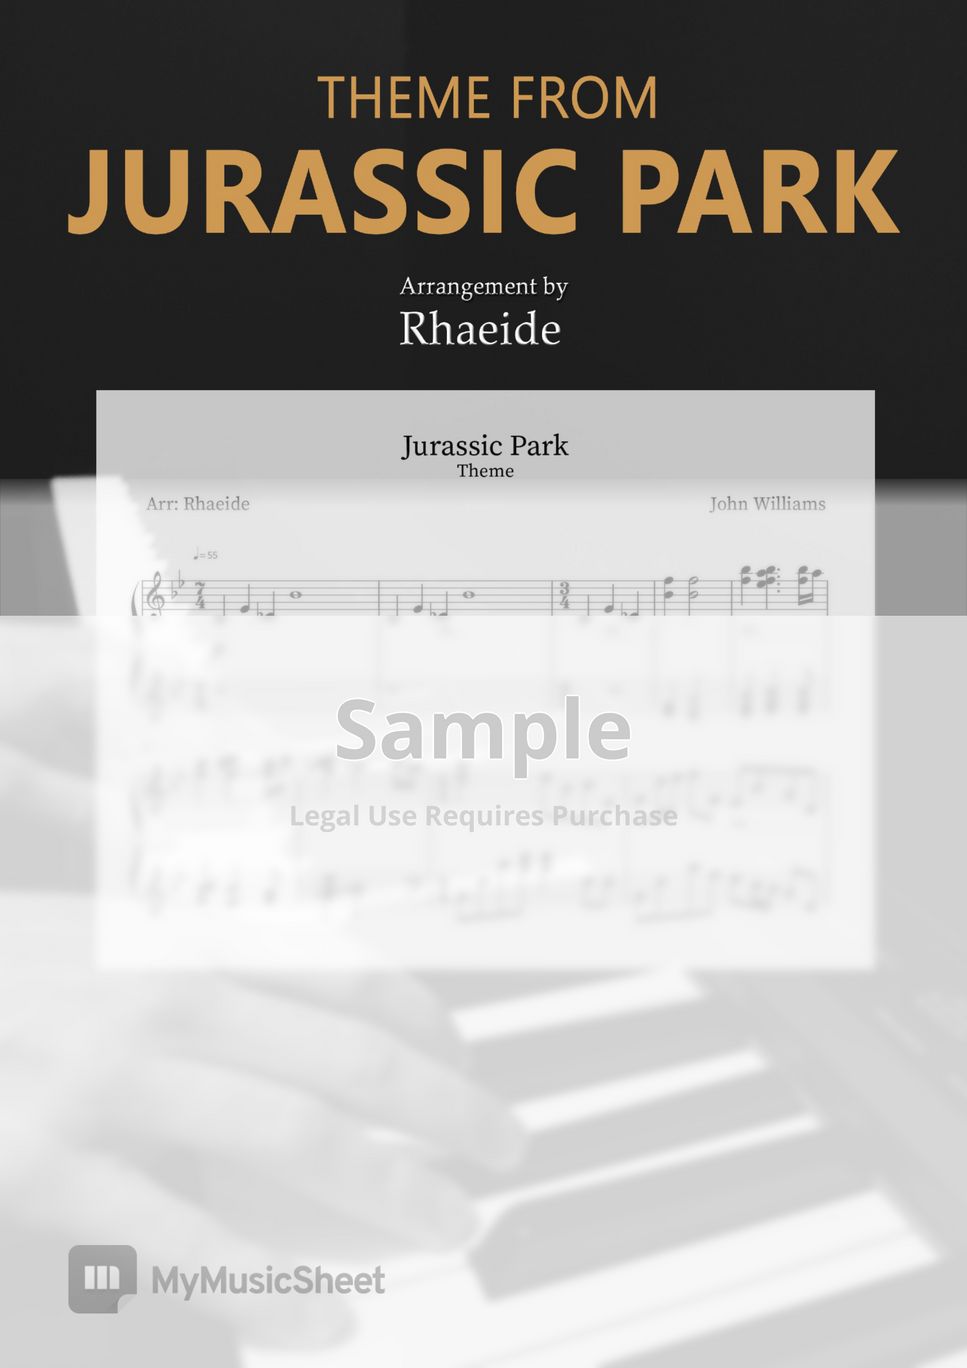 Jurassic Park - Theme (John Williams) by Rhaeide